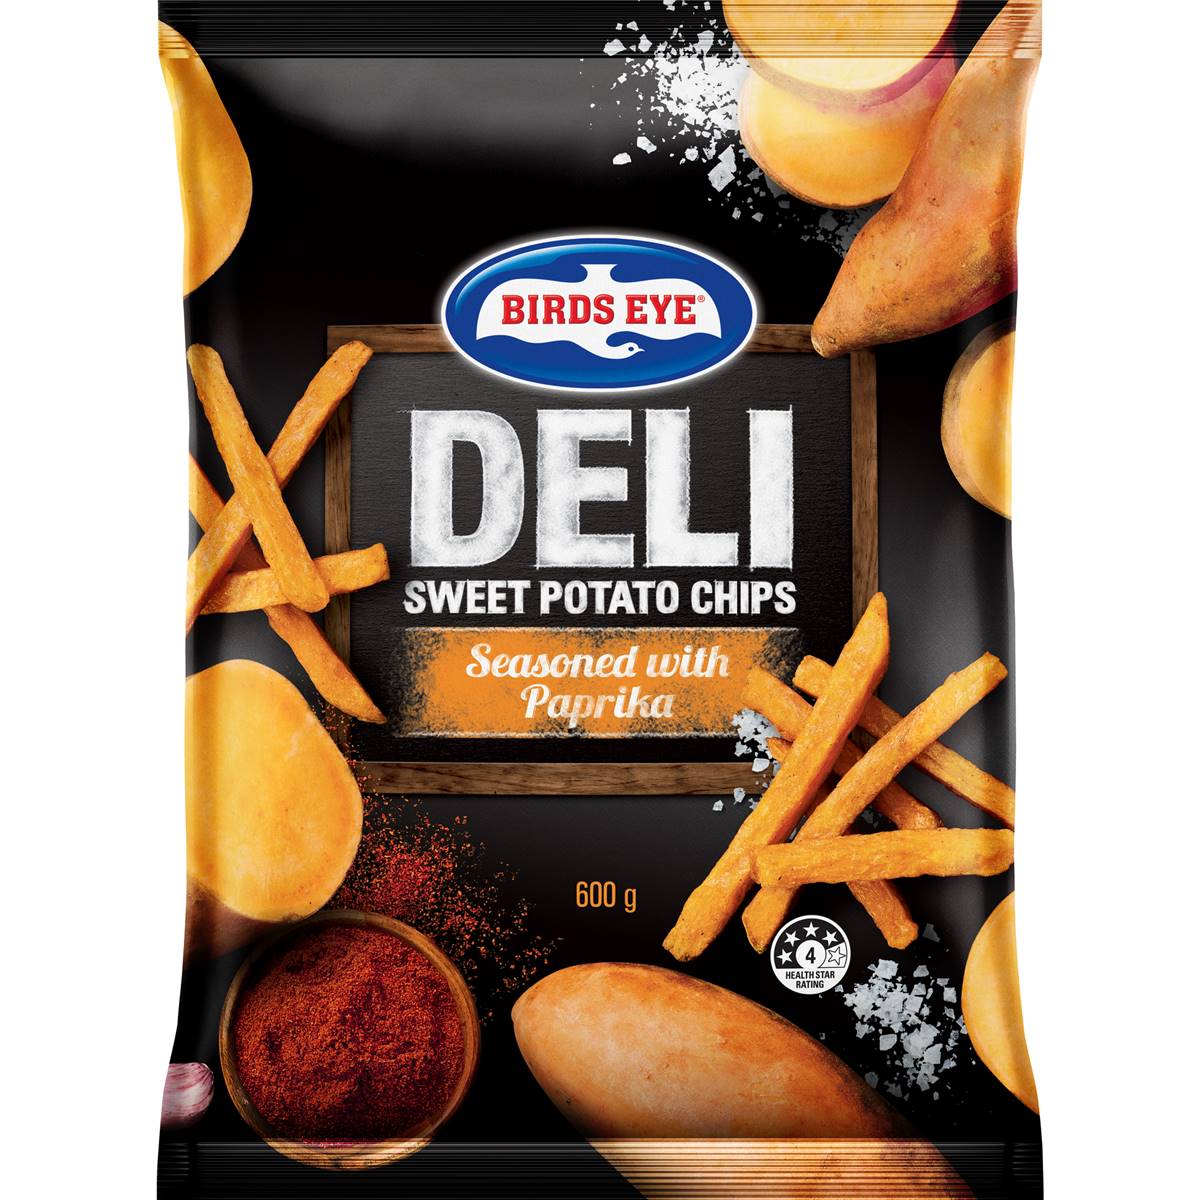 Calories in Birds Eye Deli Sweet Potato Chips